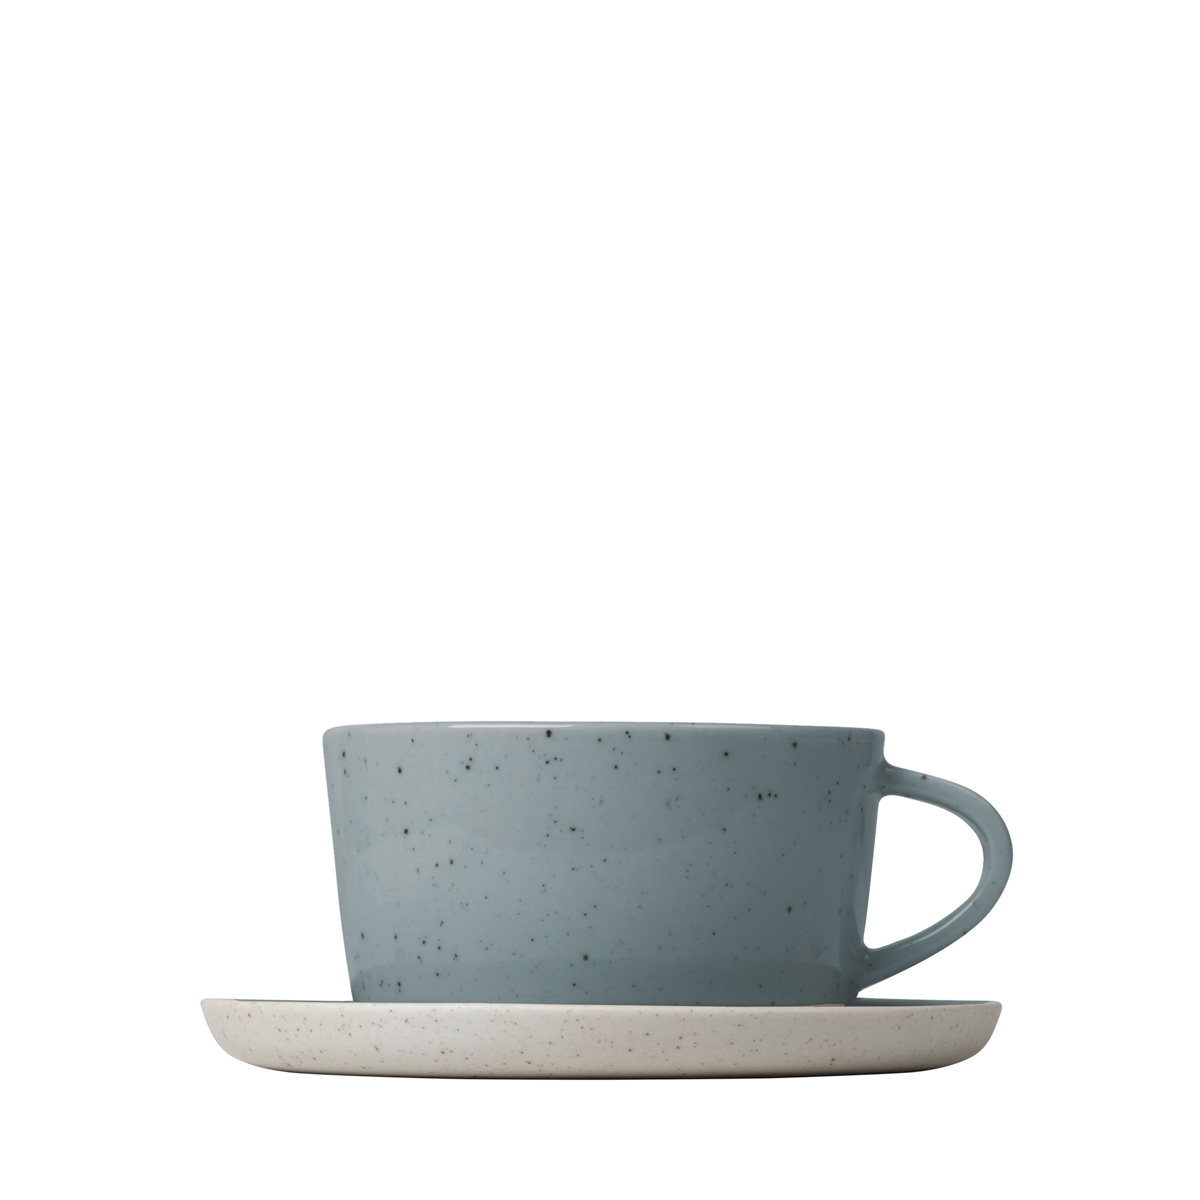 Set 2 Kaffeetassen -SABLO- Stone 150 ml, 4 tlg. , Ø 8,5 cm, Ø 12 cm. Material: Keramik. Von Blomus.